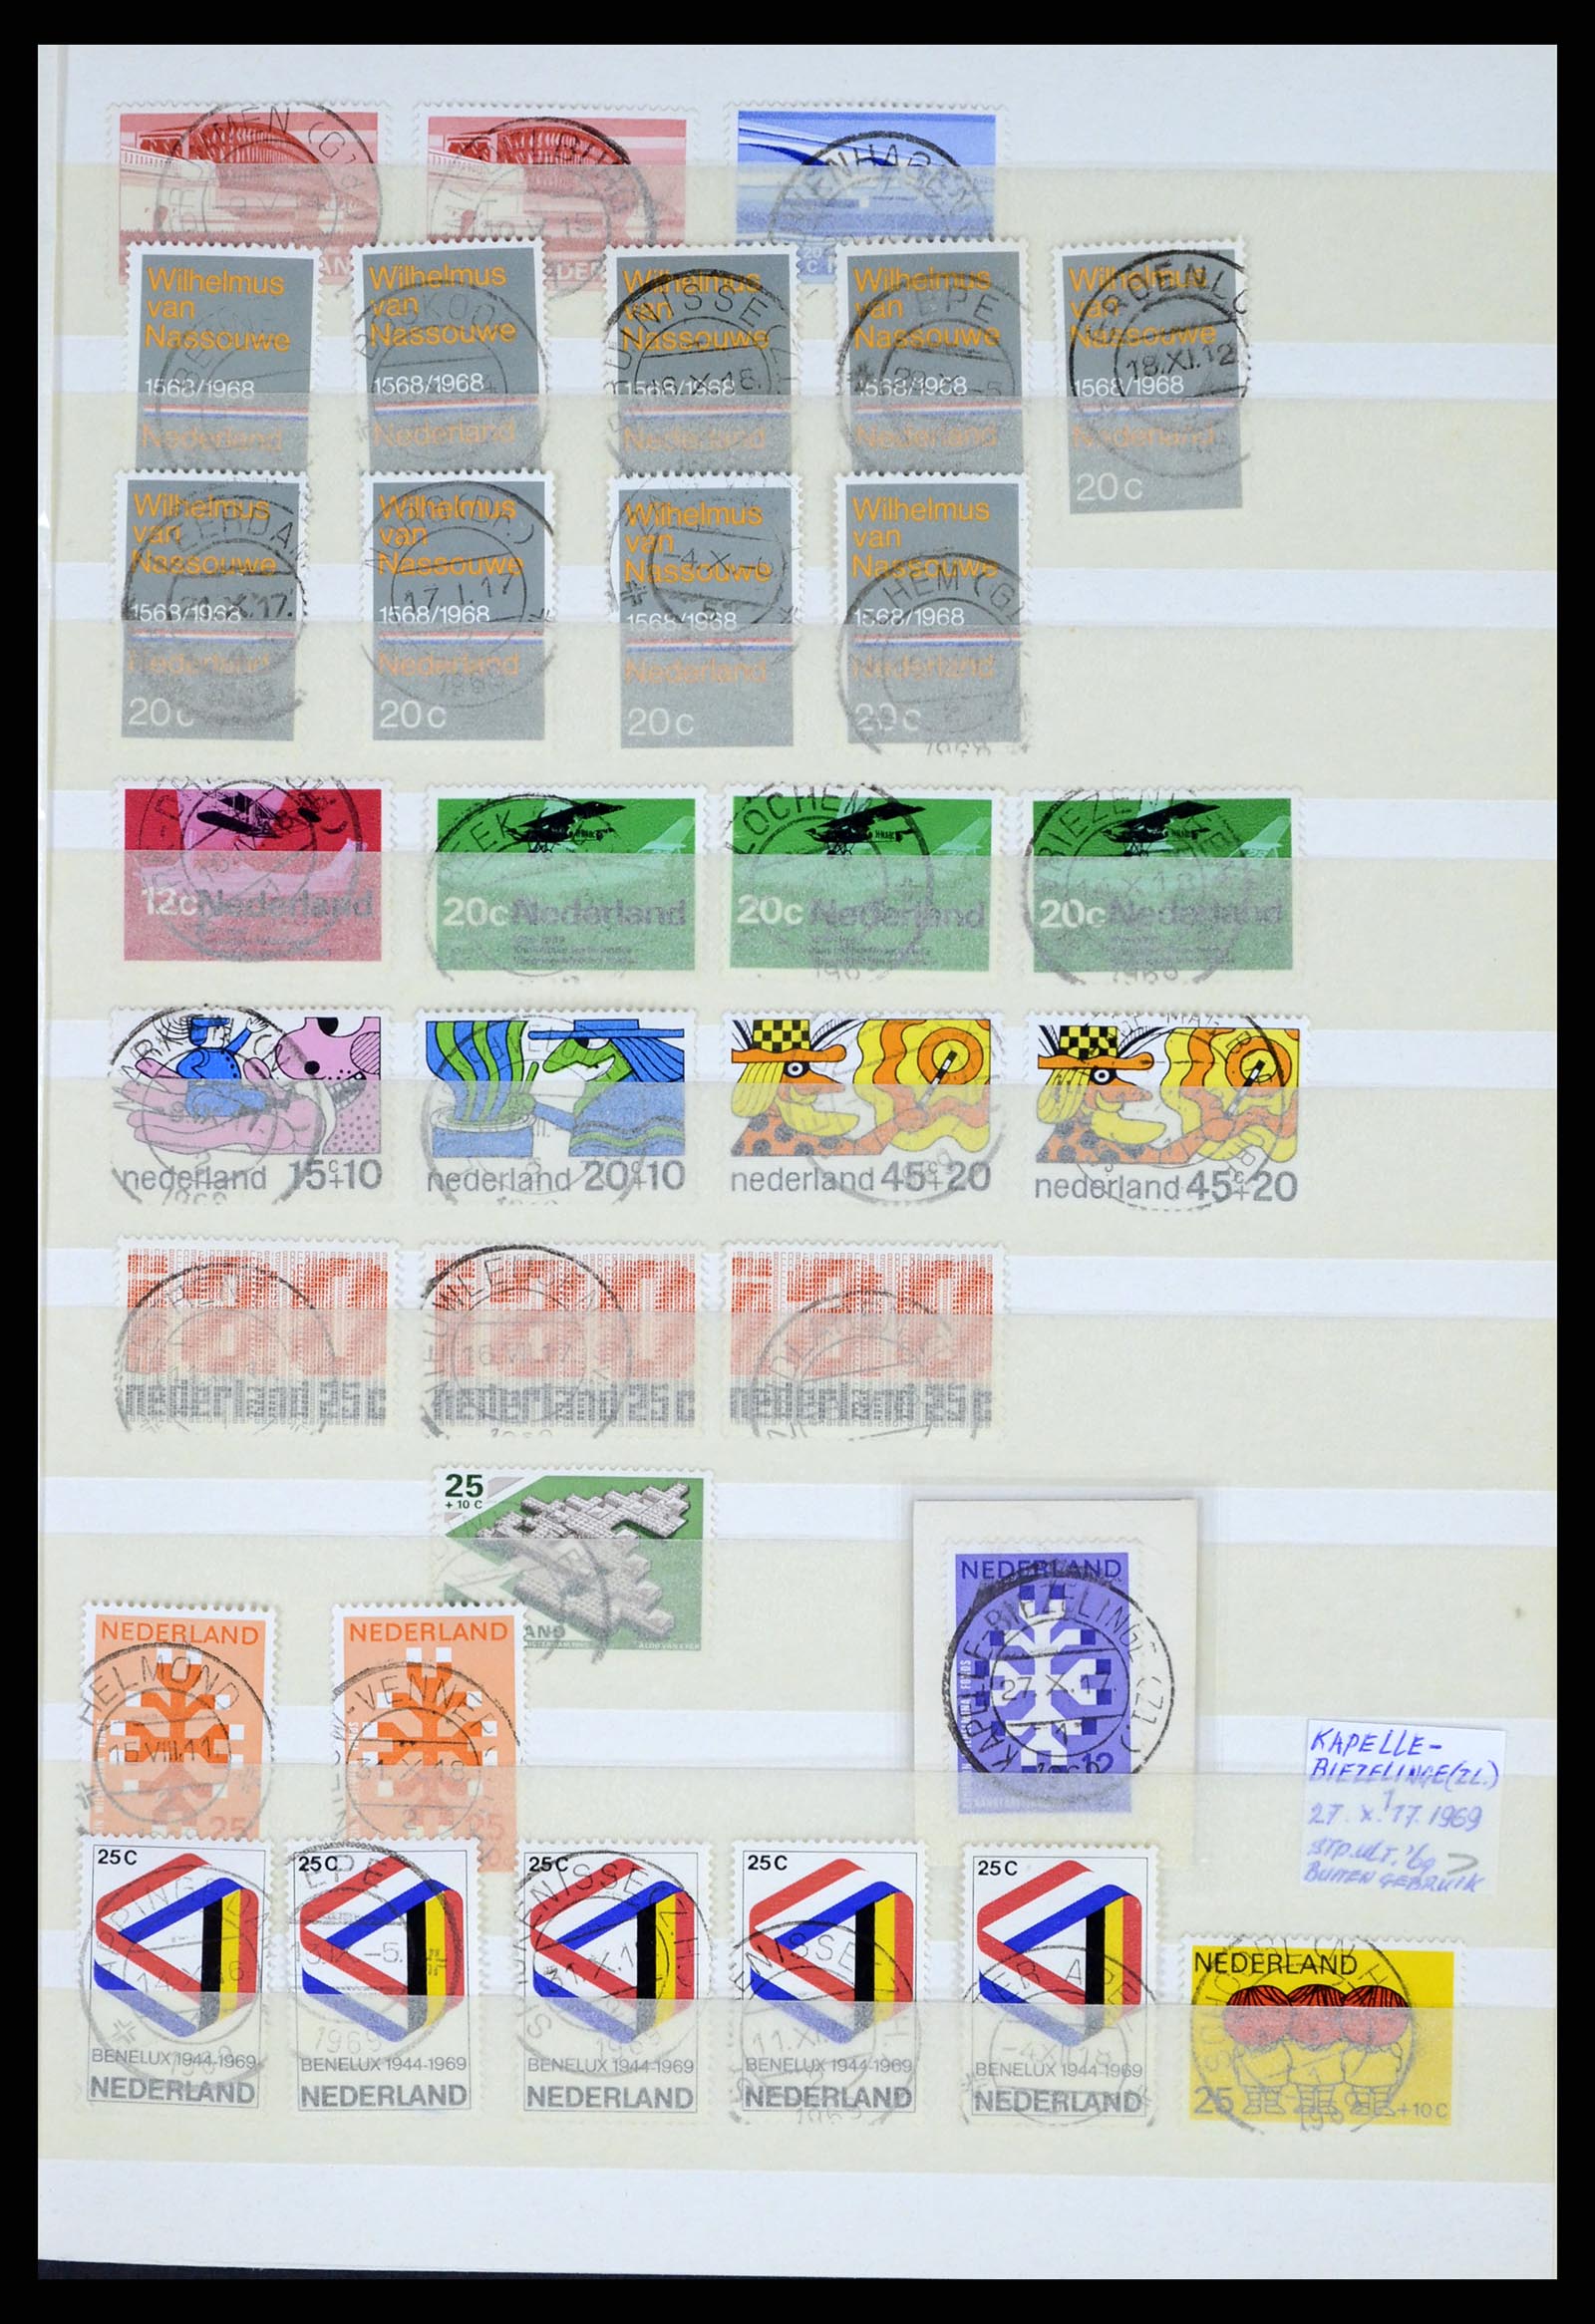 37424 061 - Stamp collection 37424 Netherlands shortbar cancels.